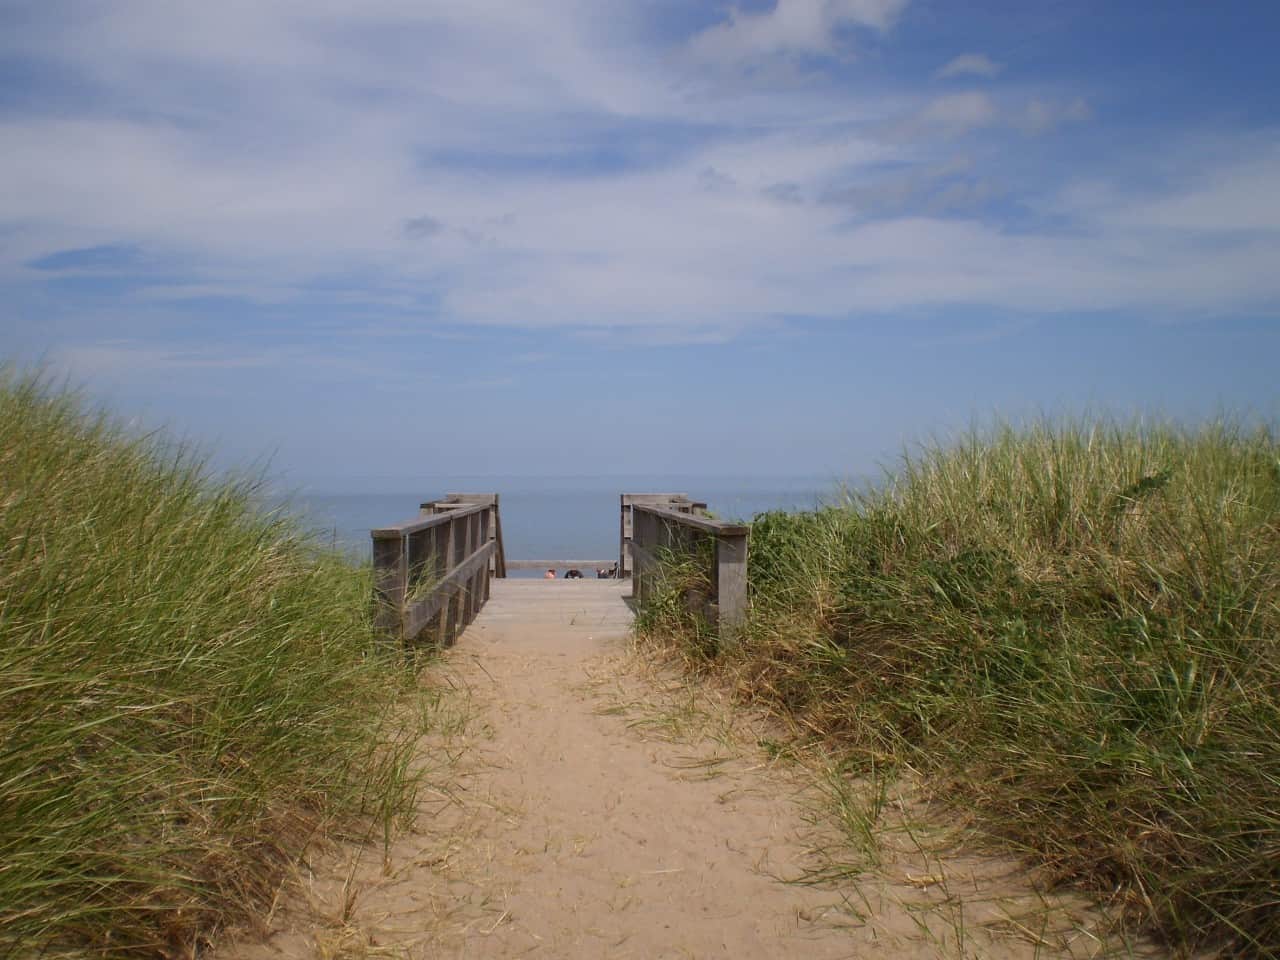 Boardwalk Dunes in Nova Scotia - Boardwalk protects the sand dunes at Melmerby Beach Provincial Park in Nova Scotia